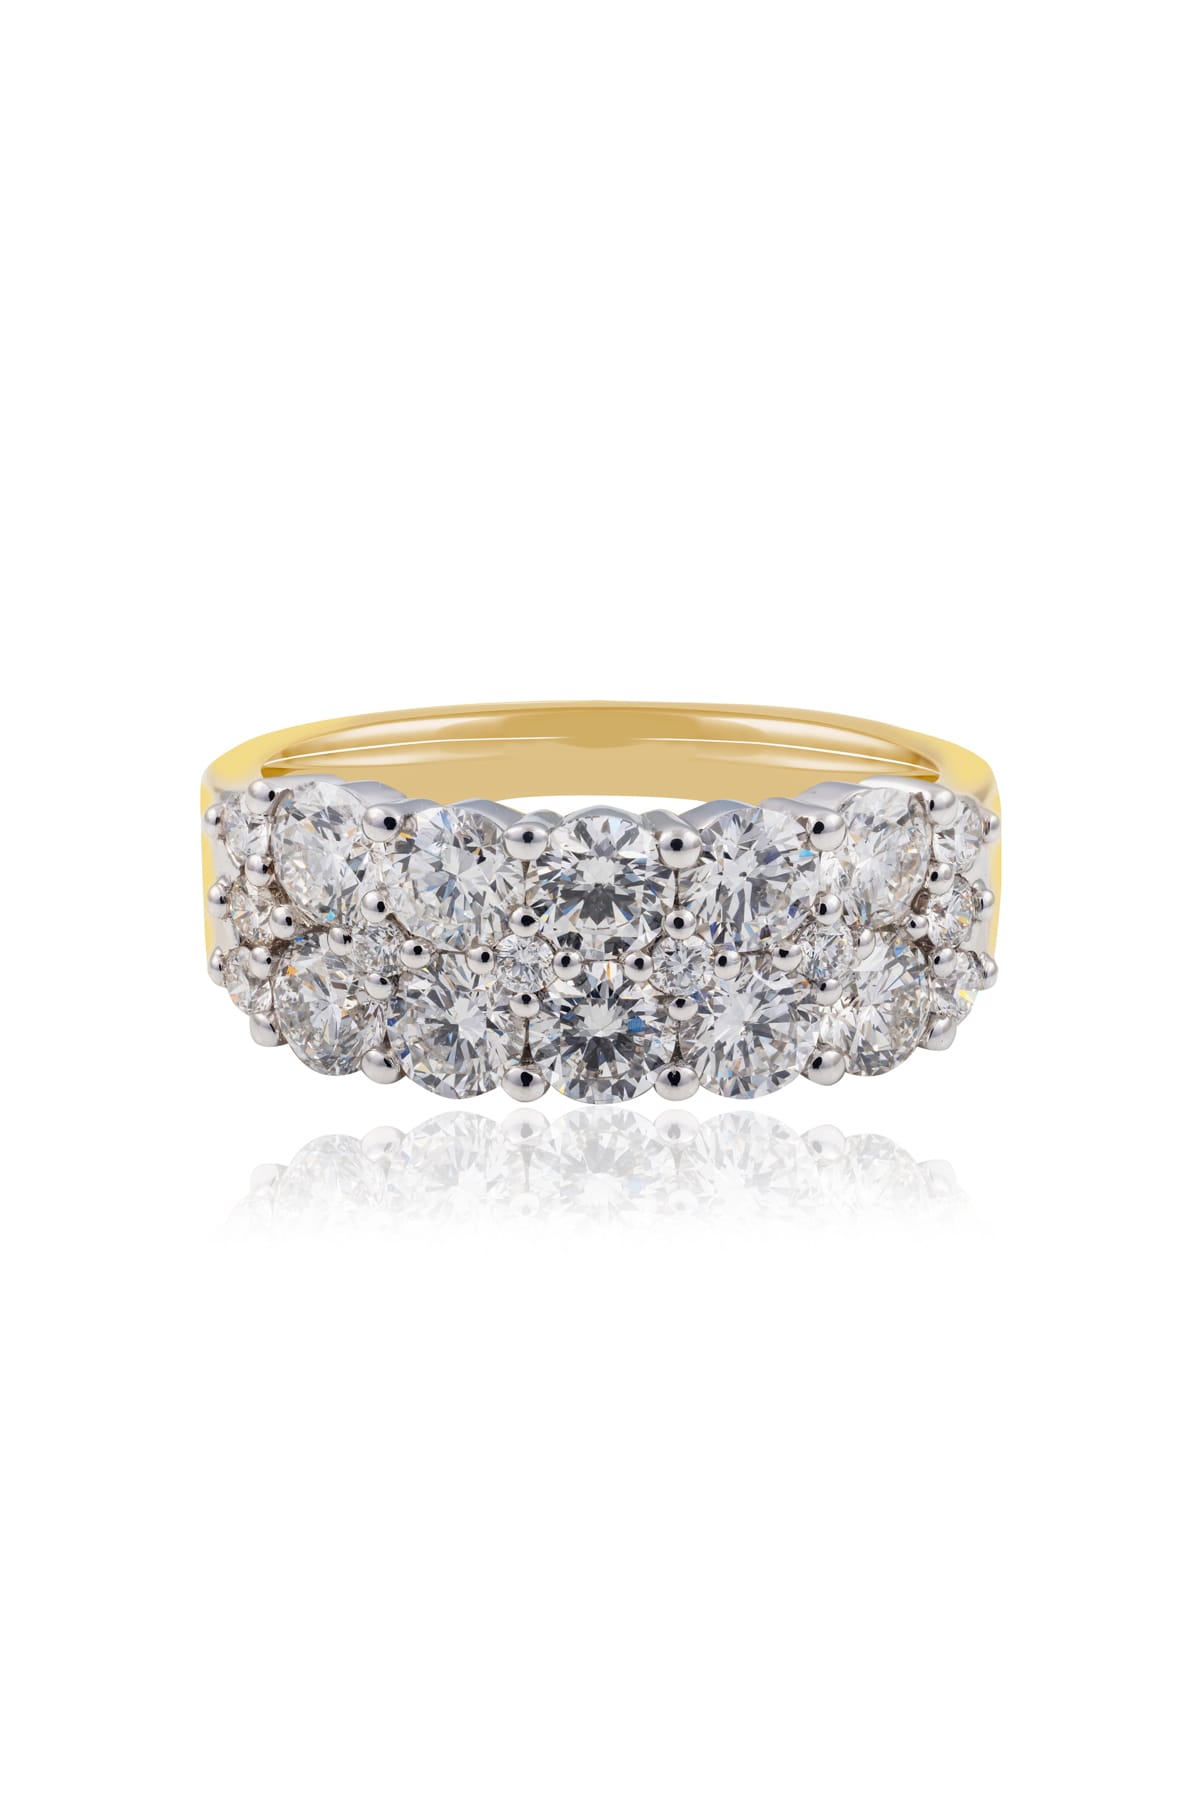 Three Row 2.42 Carat Diamond Dress Ring available at LeGassick Diamonds and Jewellery Gold Coast, Australia.